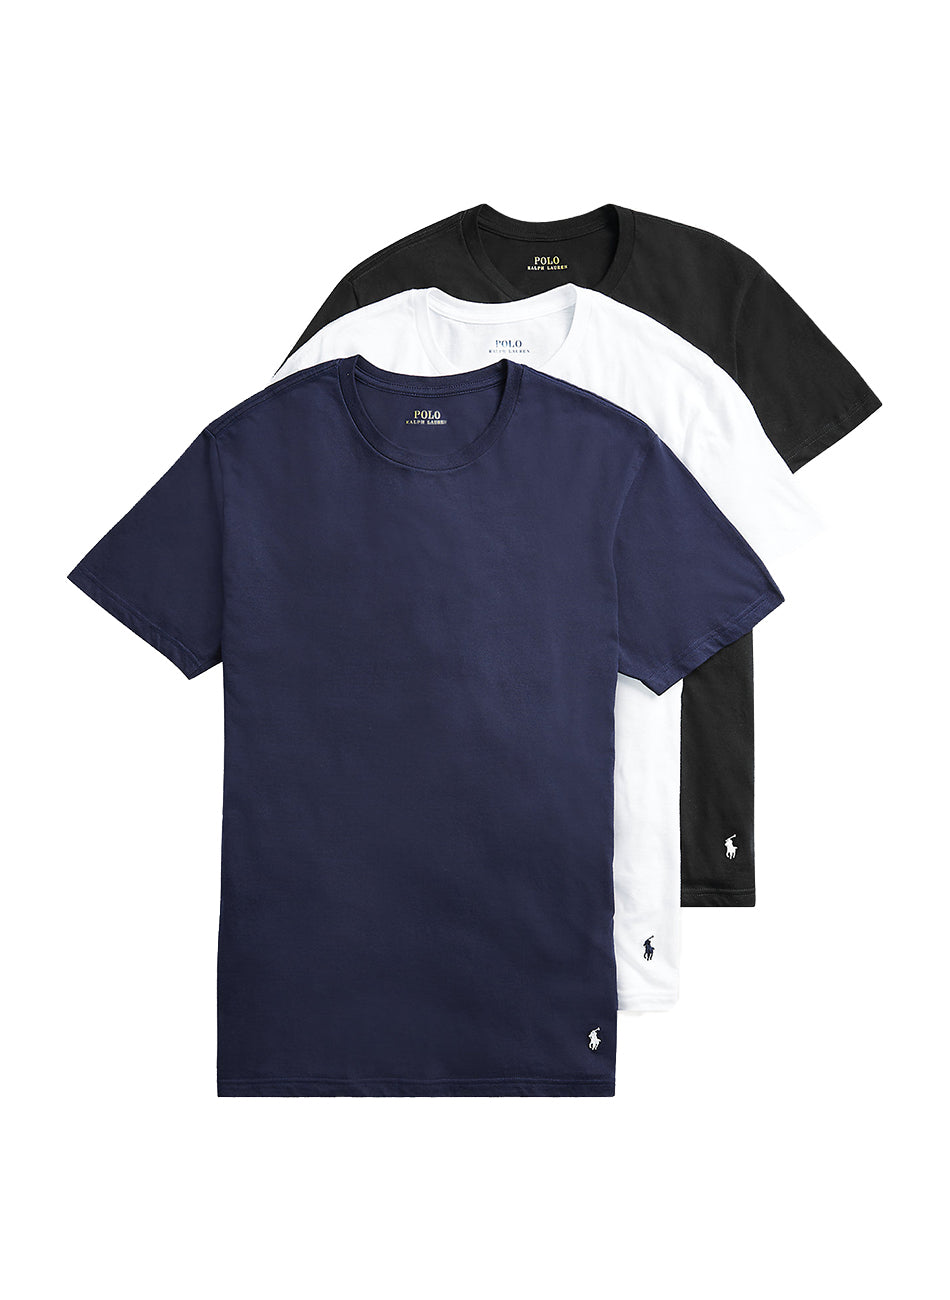 (NCCNP3-U5O) Classic Fit Cotton Crew T-Shirt 3 Pack - Navy/White/Black